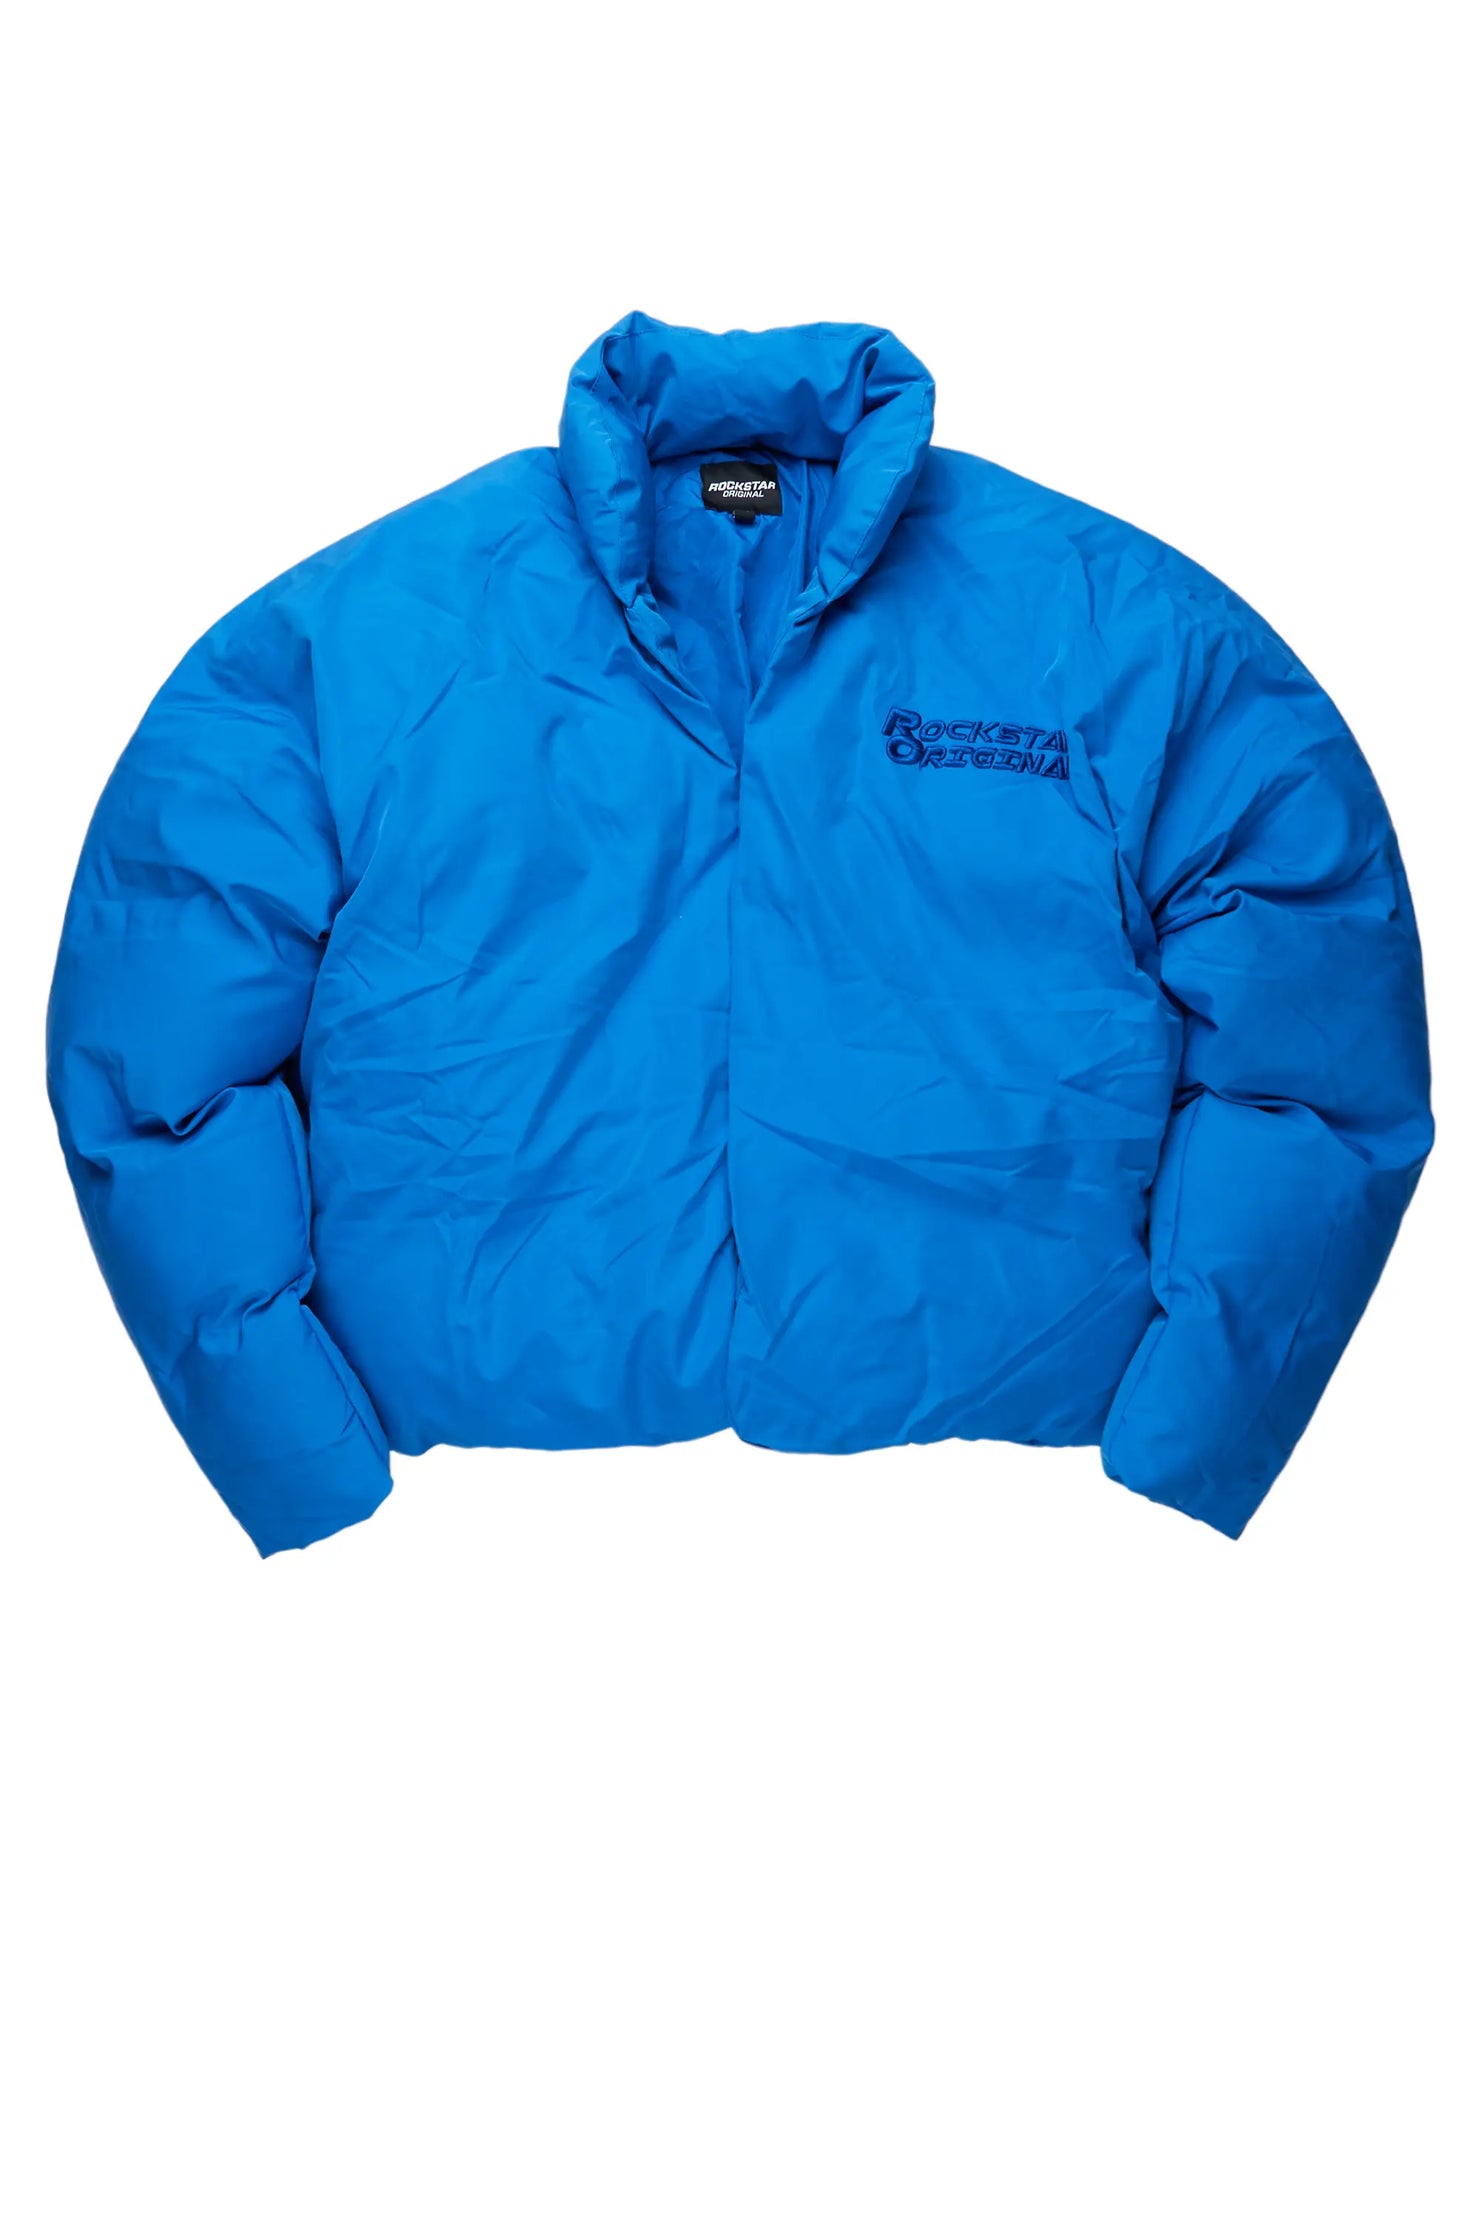 Damien Royal Blue Puffer Jacket